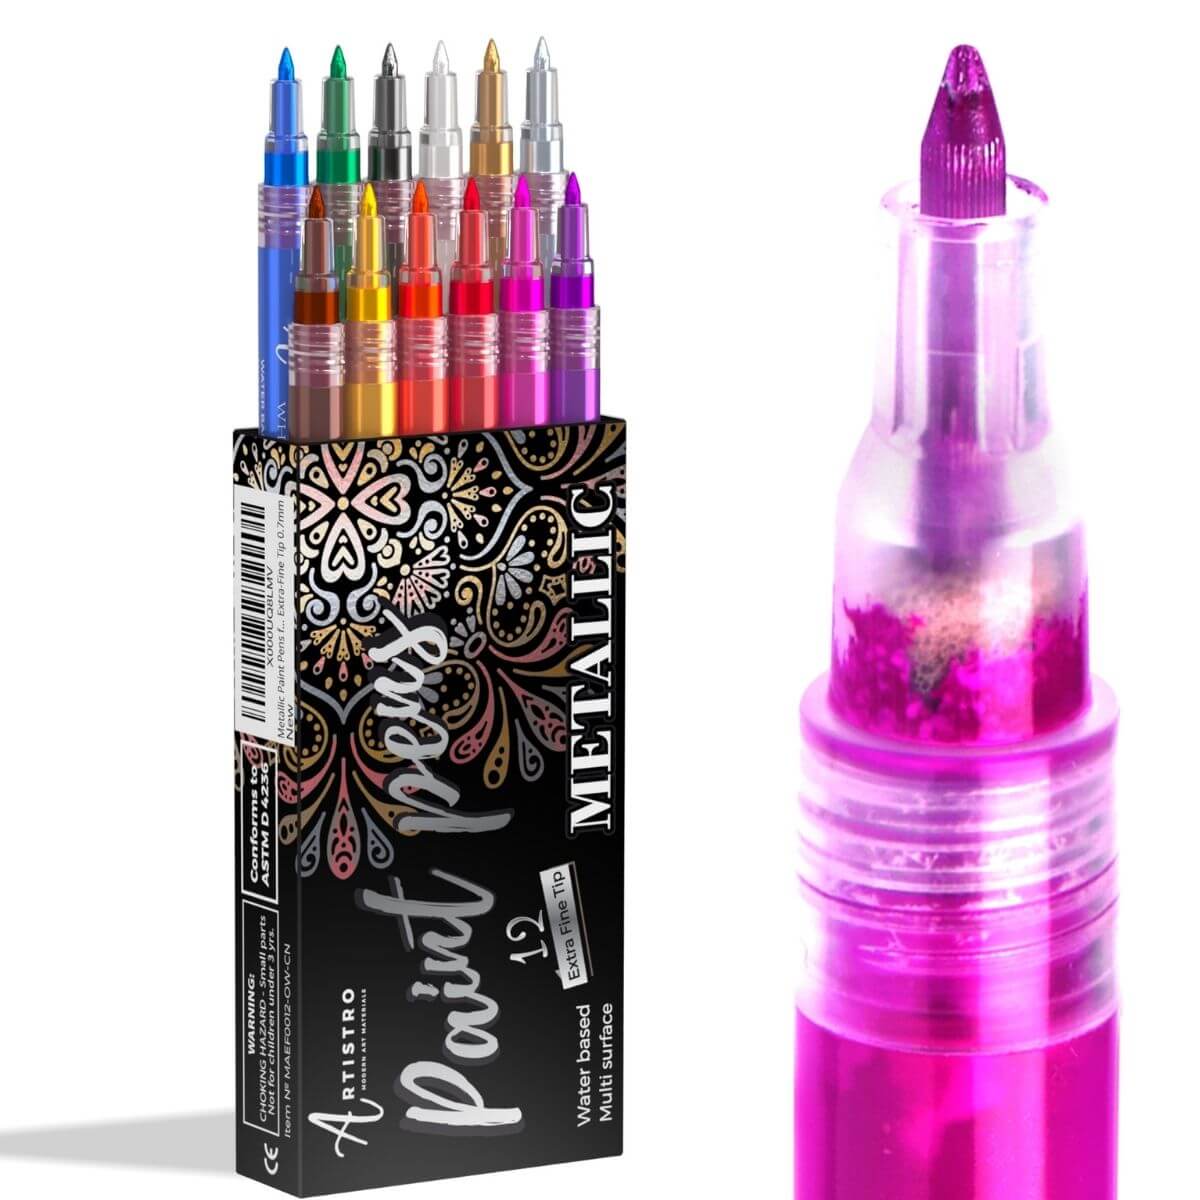 ARTISTRO Water-Based Art Supply Bundle: Trending Colors Marker Bundle